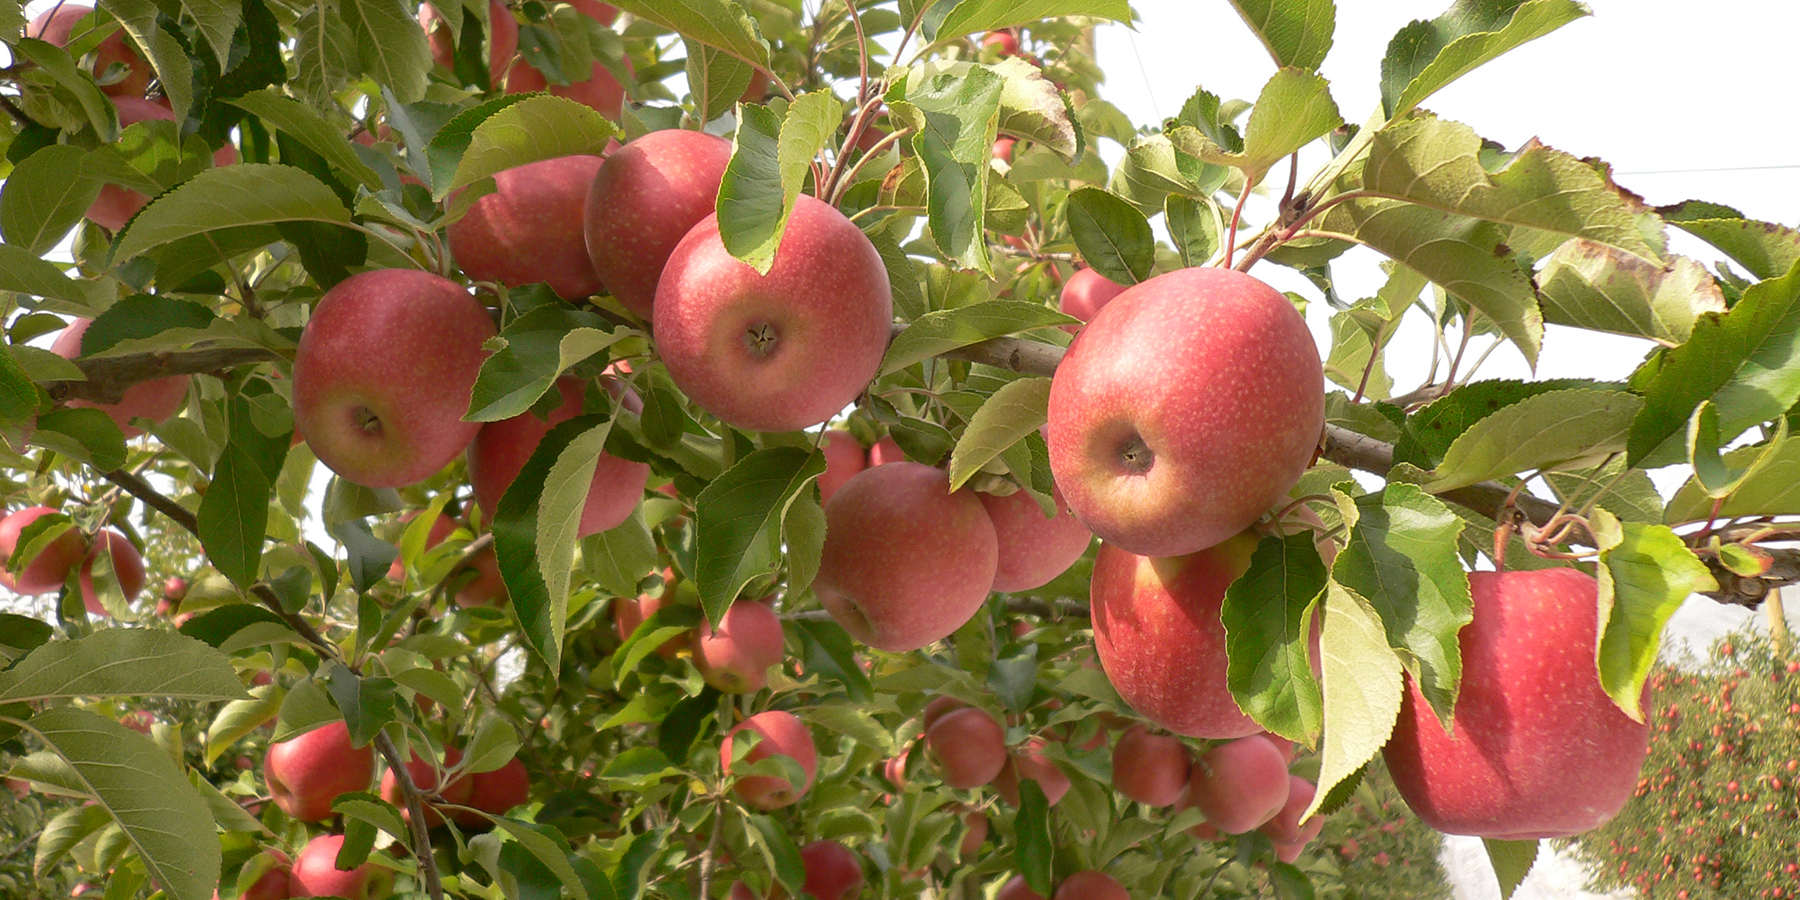 Meet our local growers, Staples Apples, Mornington Peninsula